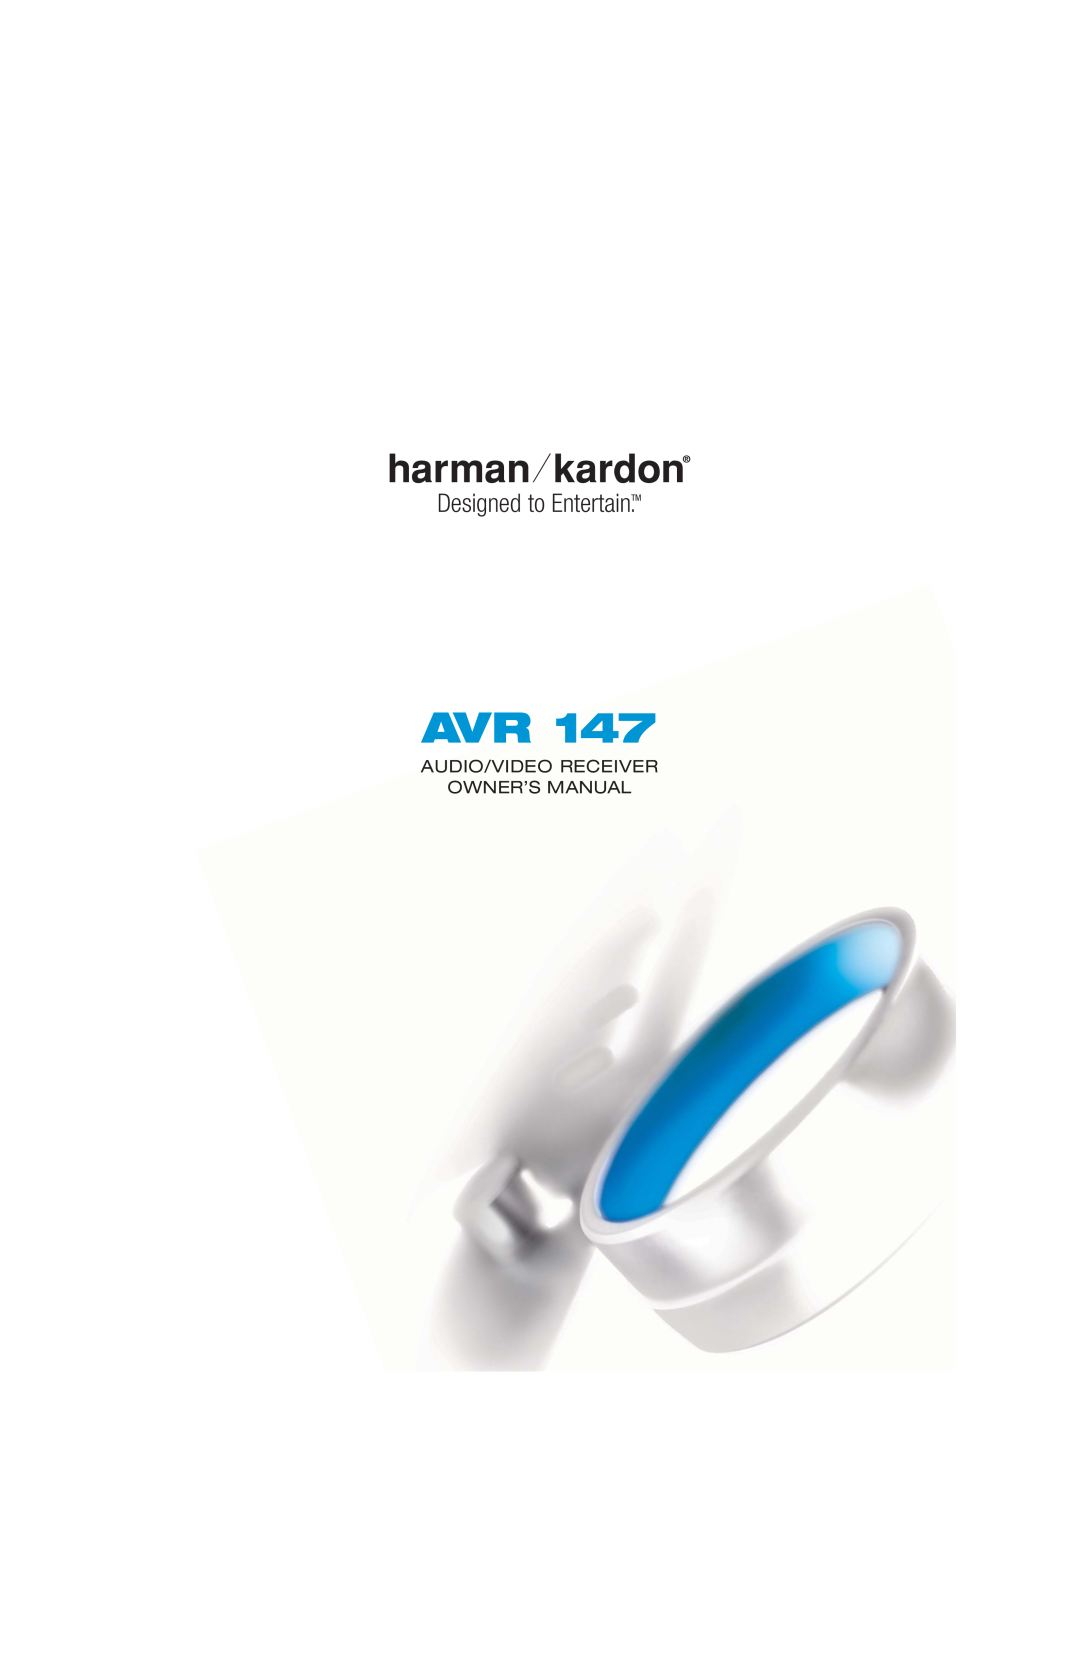 Harman-Kardon AVR 147 owner manual Designed to Entertain.TM, Audio/Video Receiver Owner’S Manual 